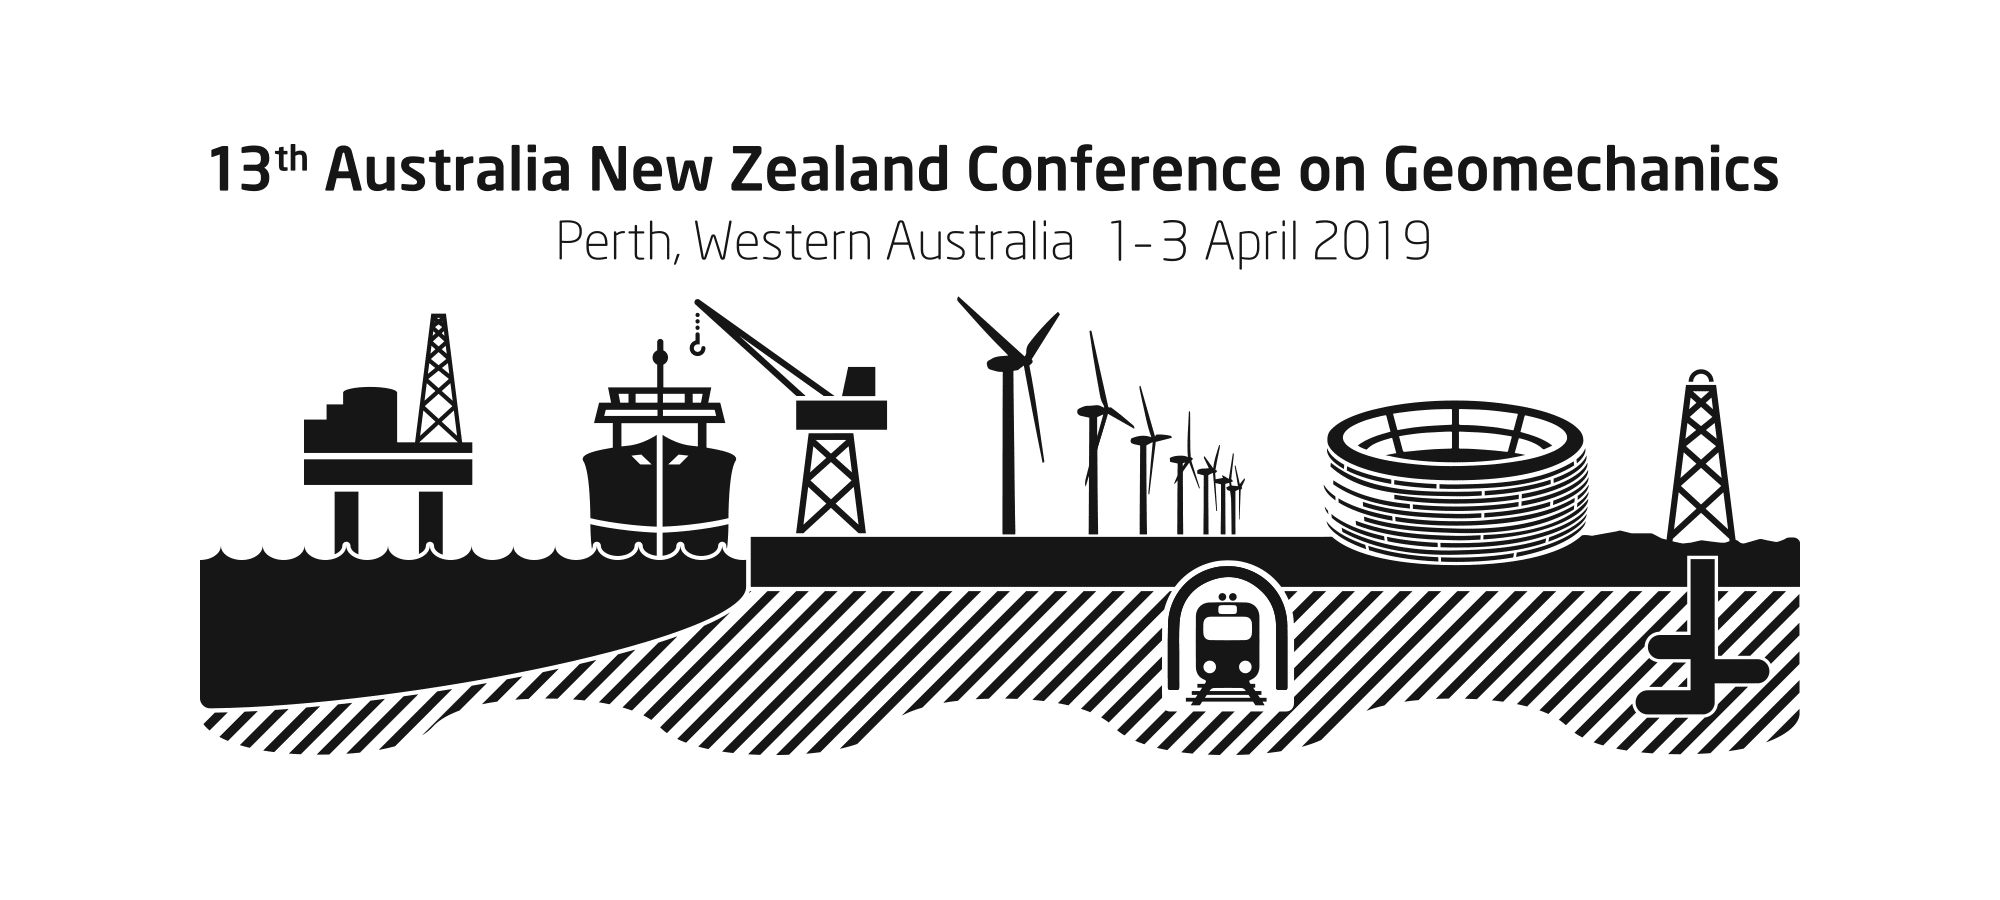 Geomechanics Conference Australia New Zealand 13th ANZ Geomechanics Conference Logo